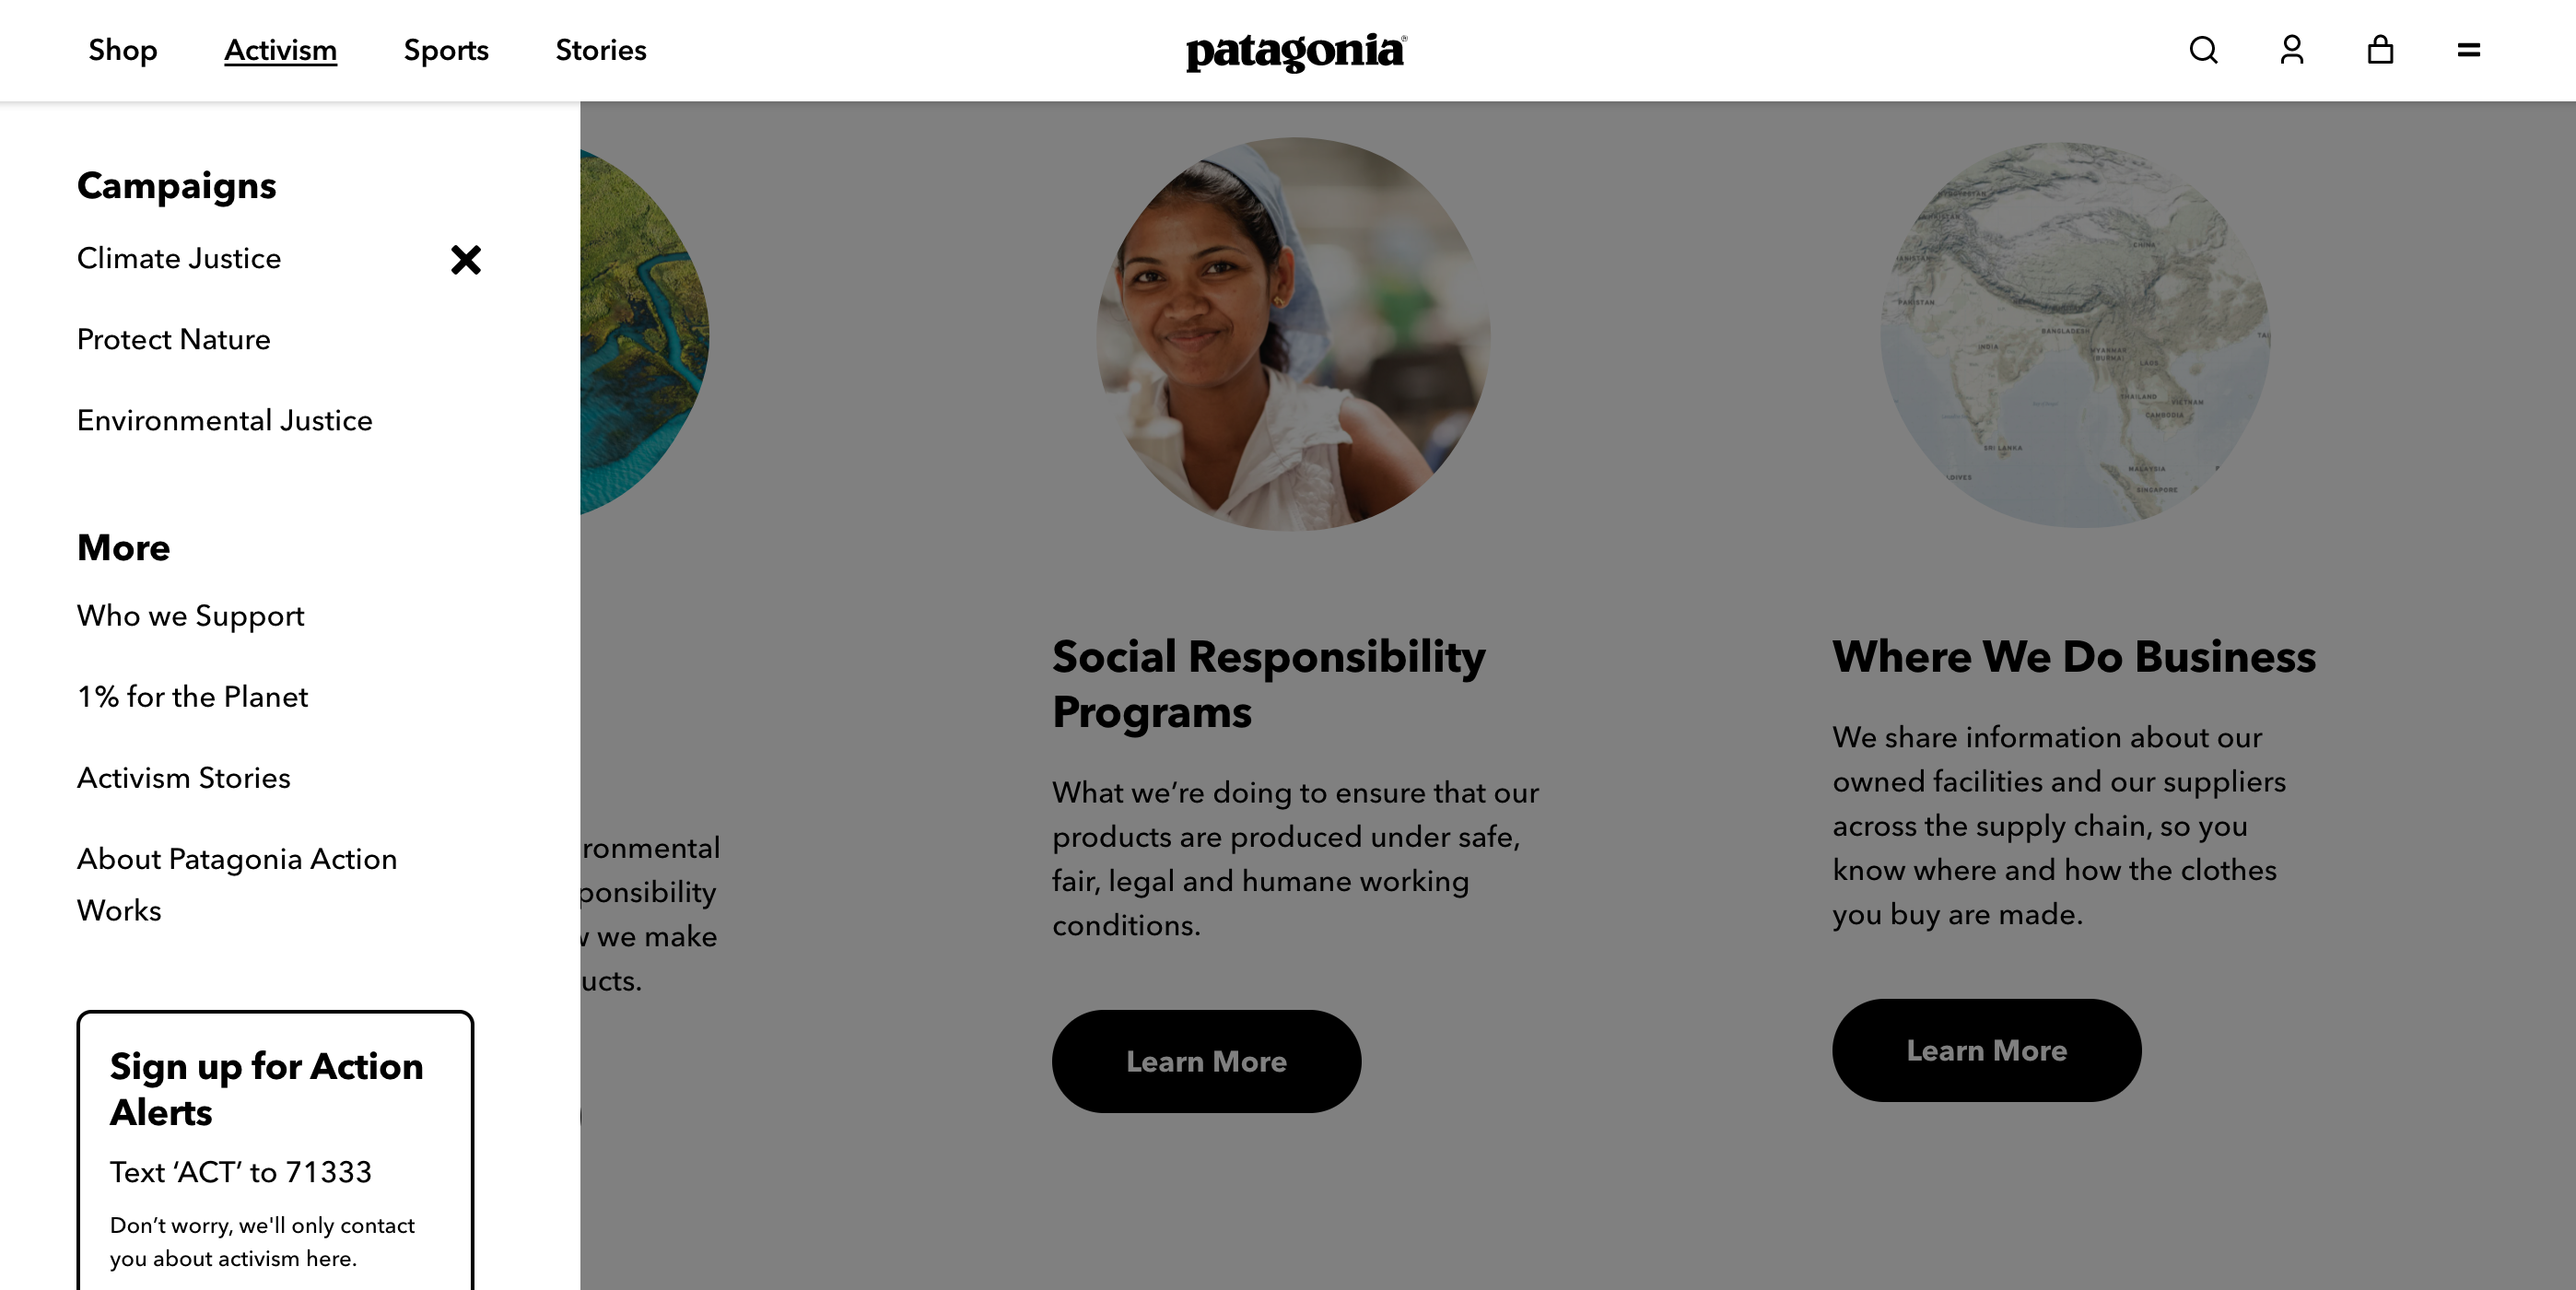 Patagonia's activism website menu